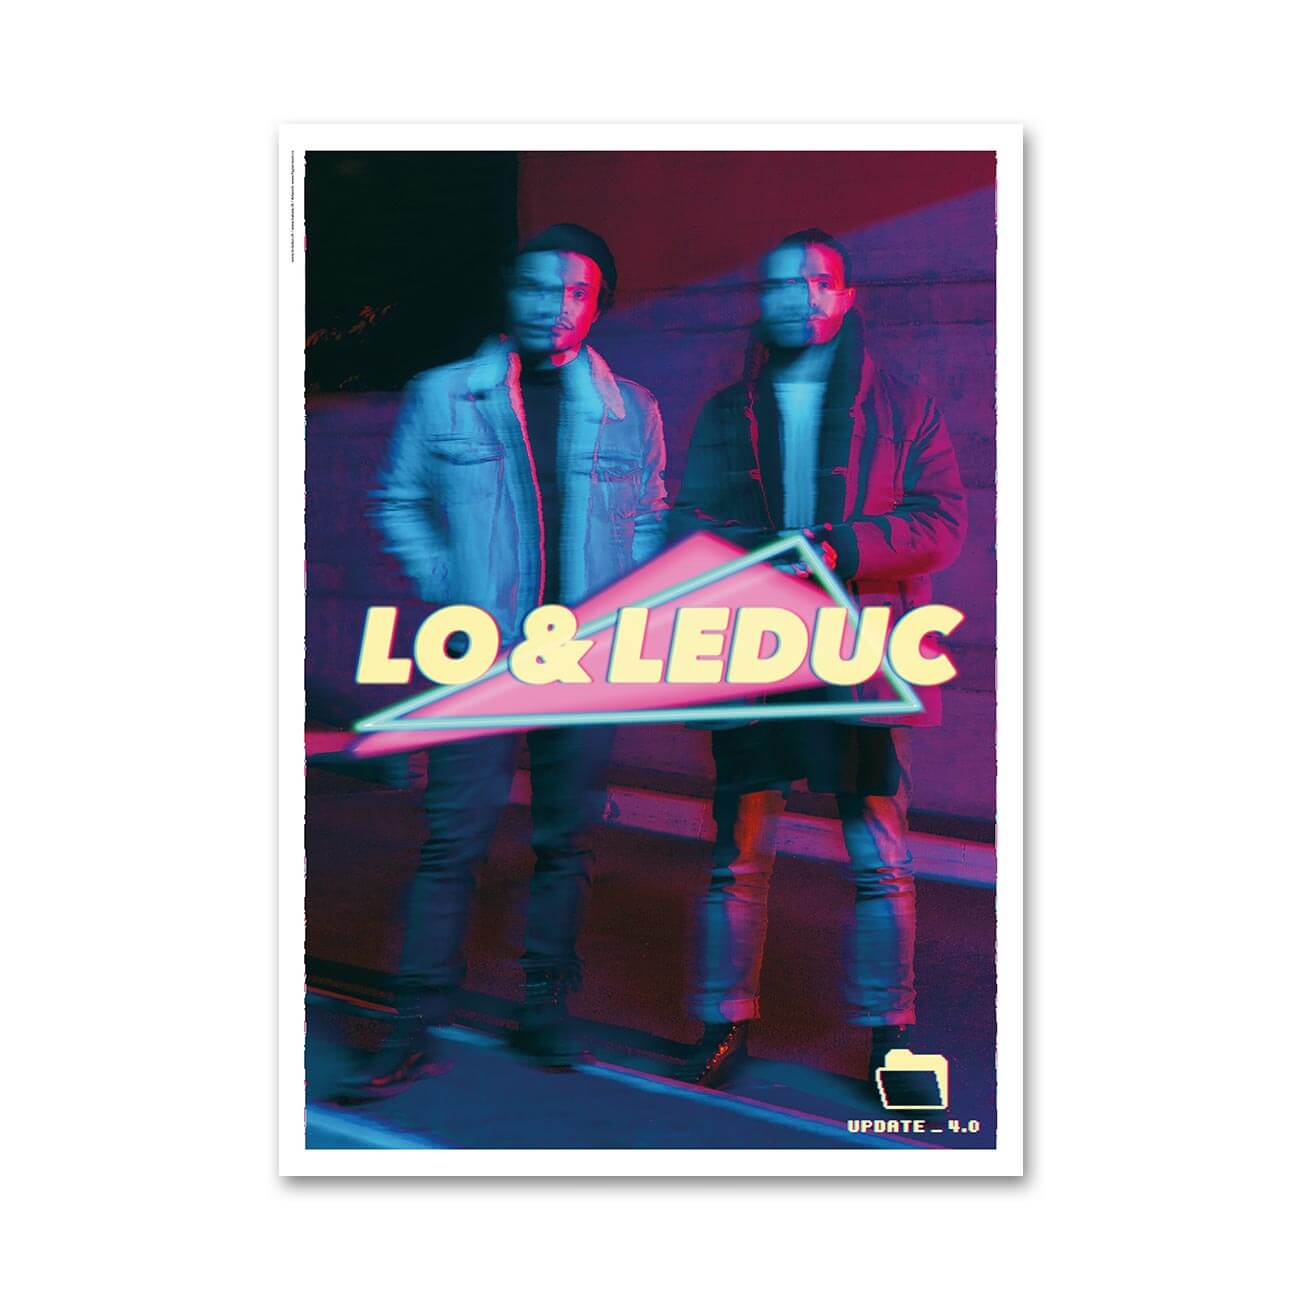 Lo & Leduc | Poster | Update 4.0